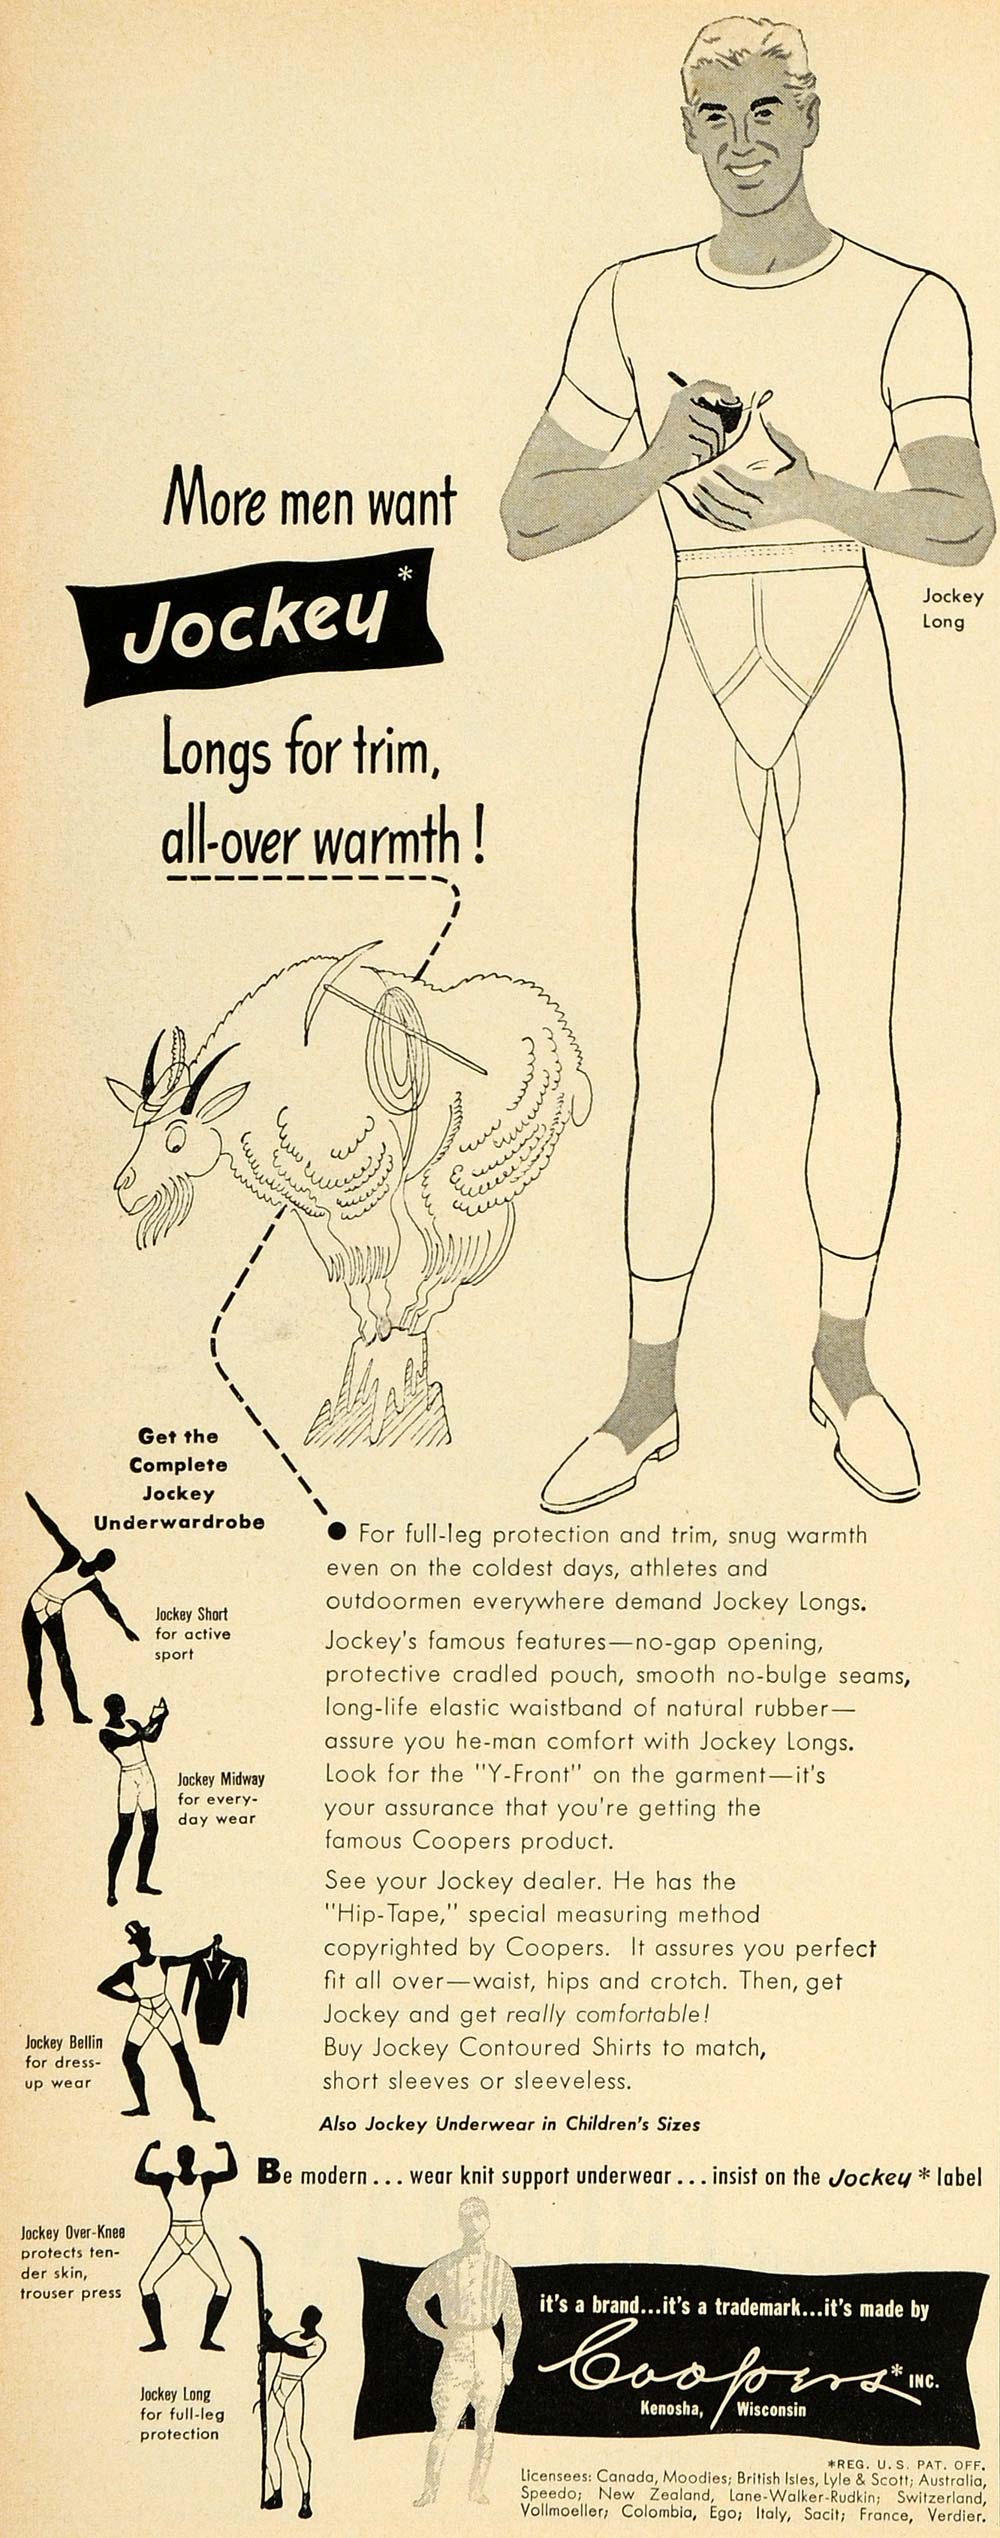 1947 Ad Jockey Underwear Sportswear Hosiery Baseball - ORIGINAL ADVERTISING  ESQ4